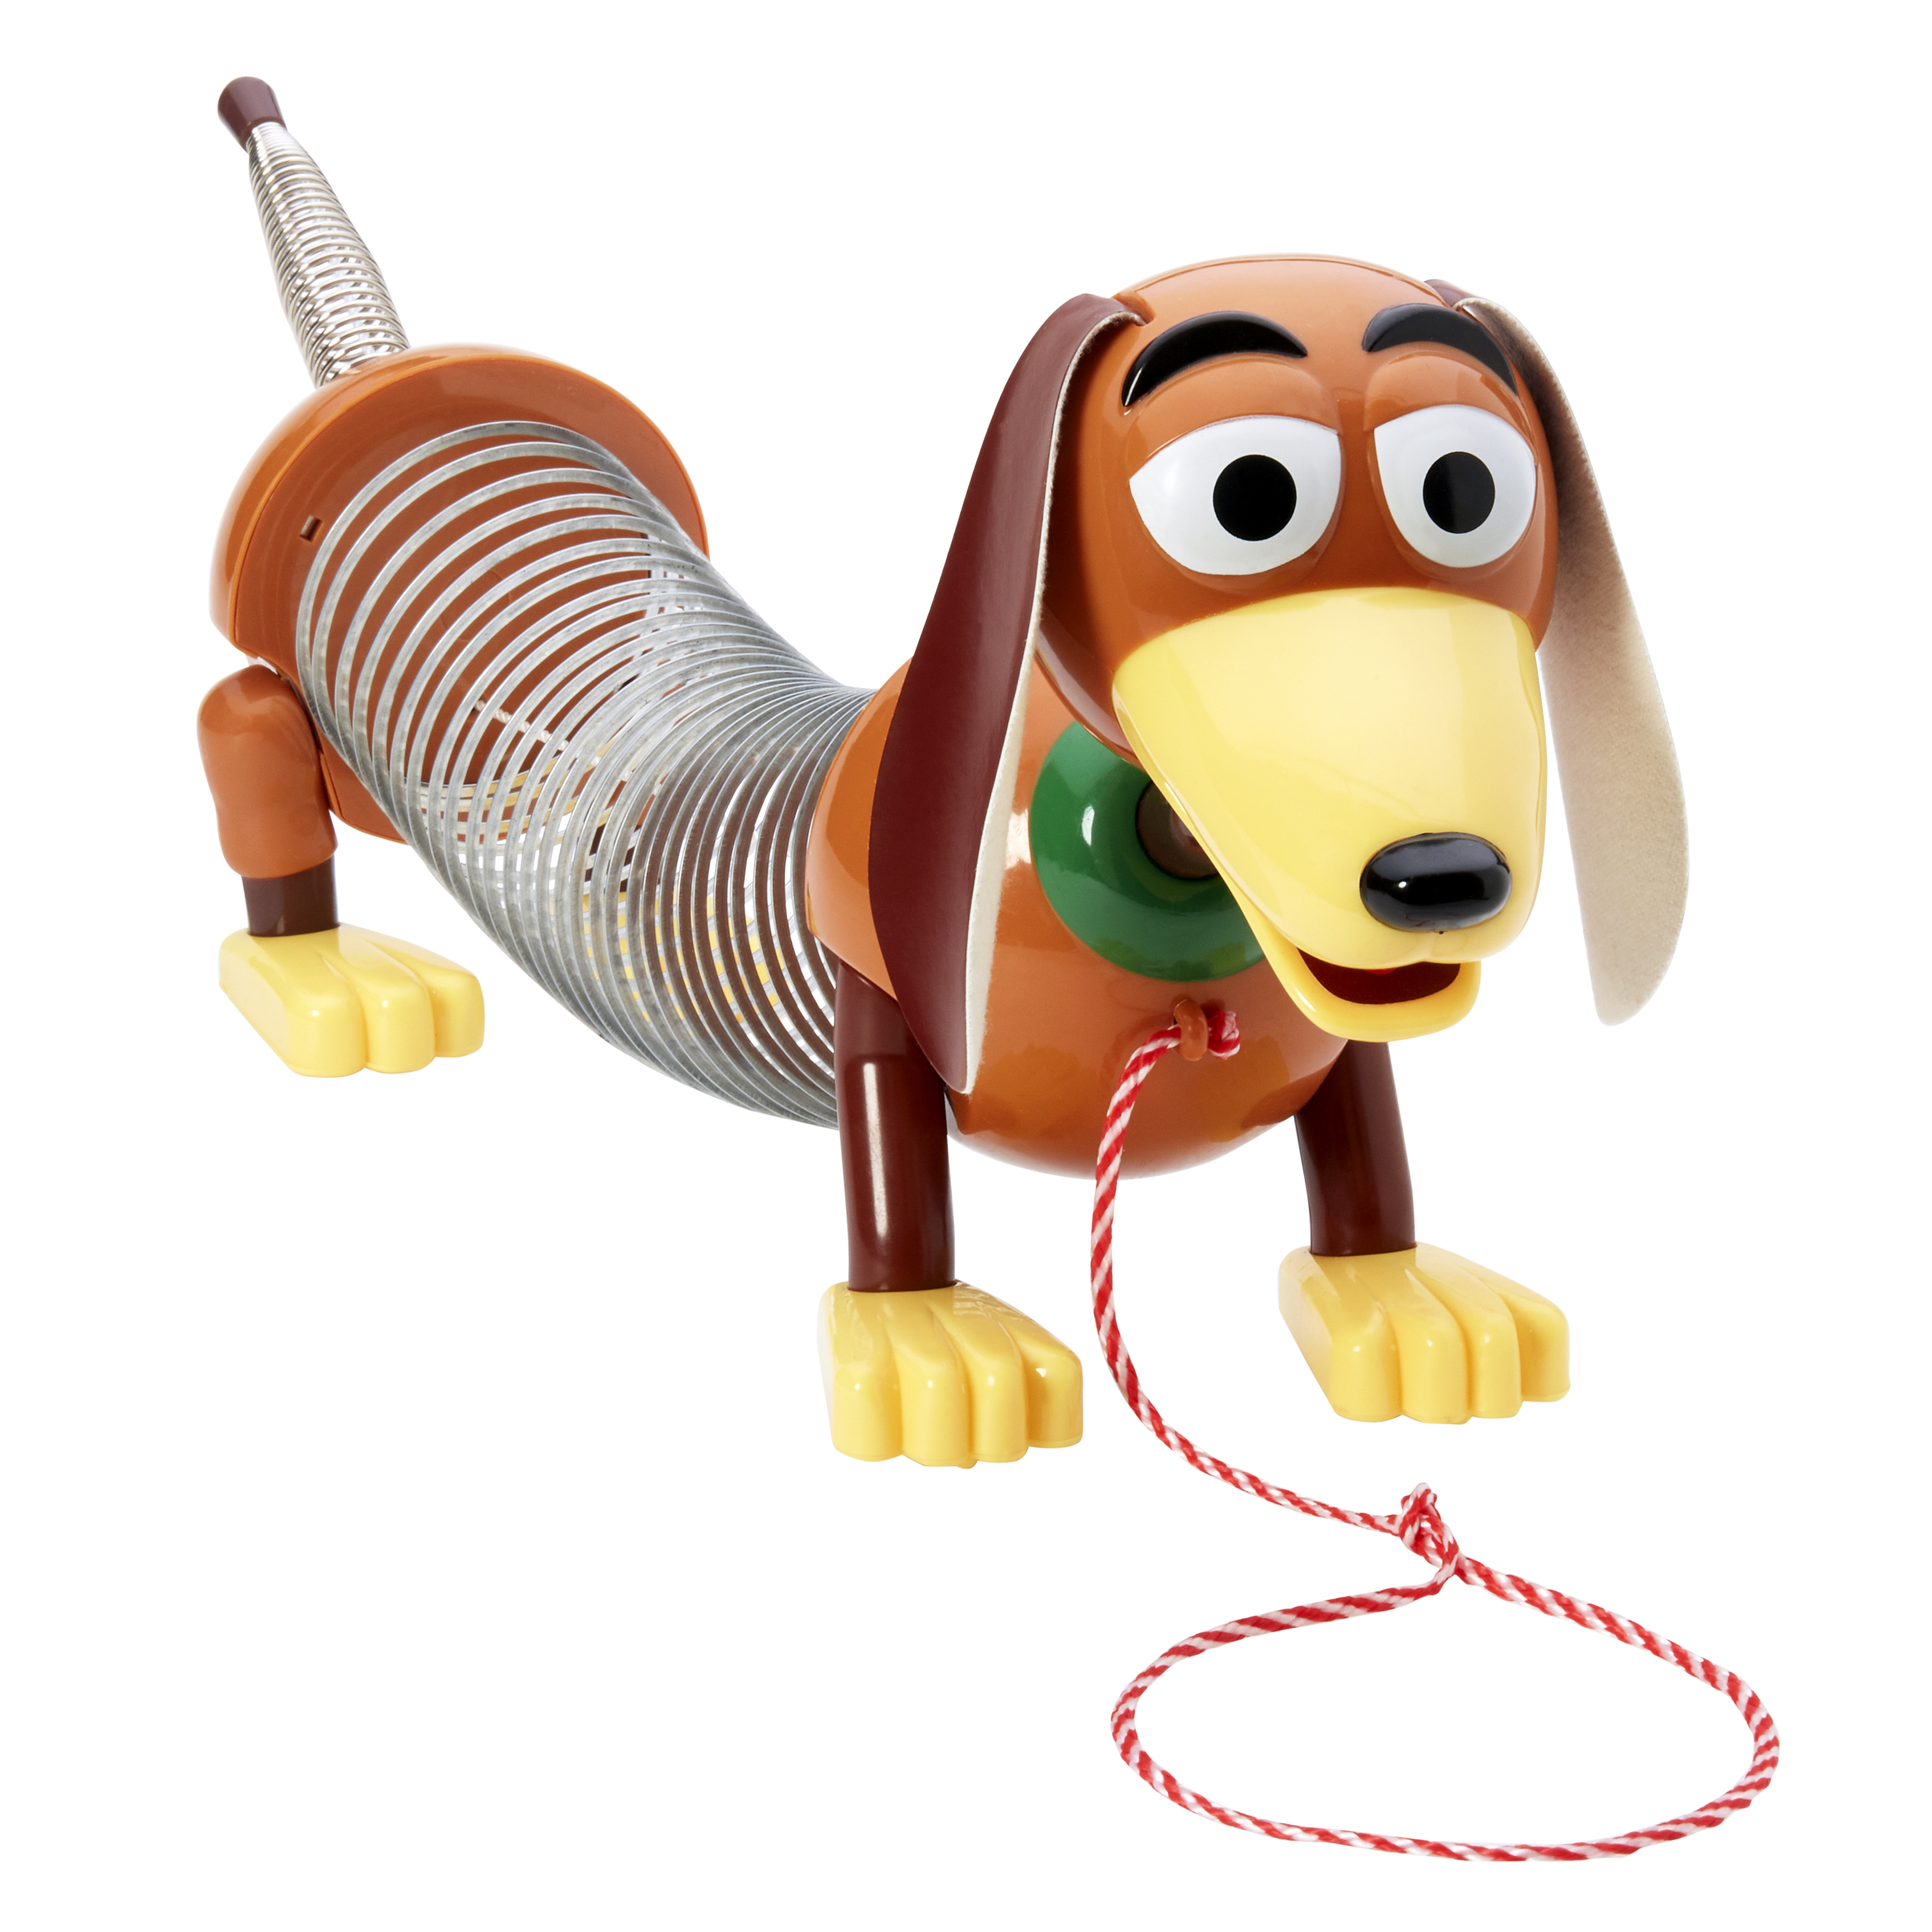 Disney Pixar Toy Story 4 Slinky Dog - image 4 of 7